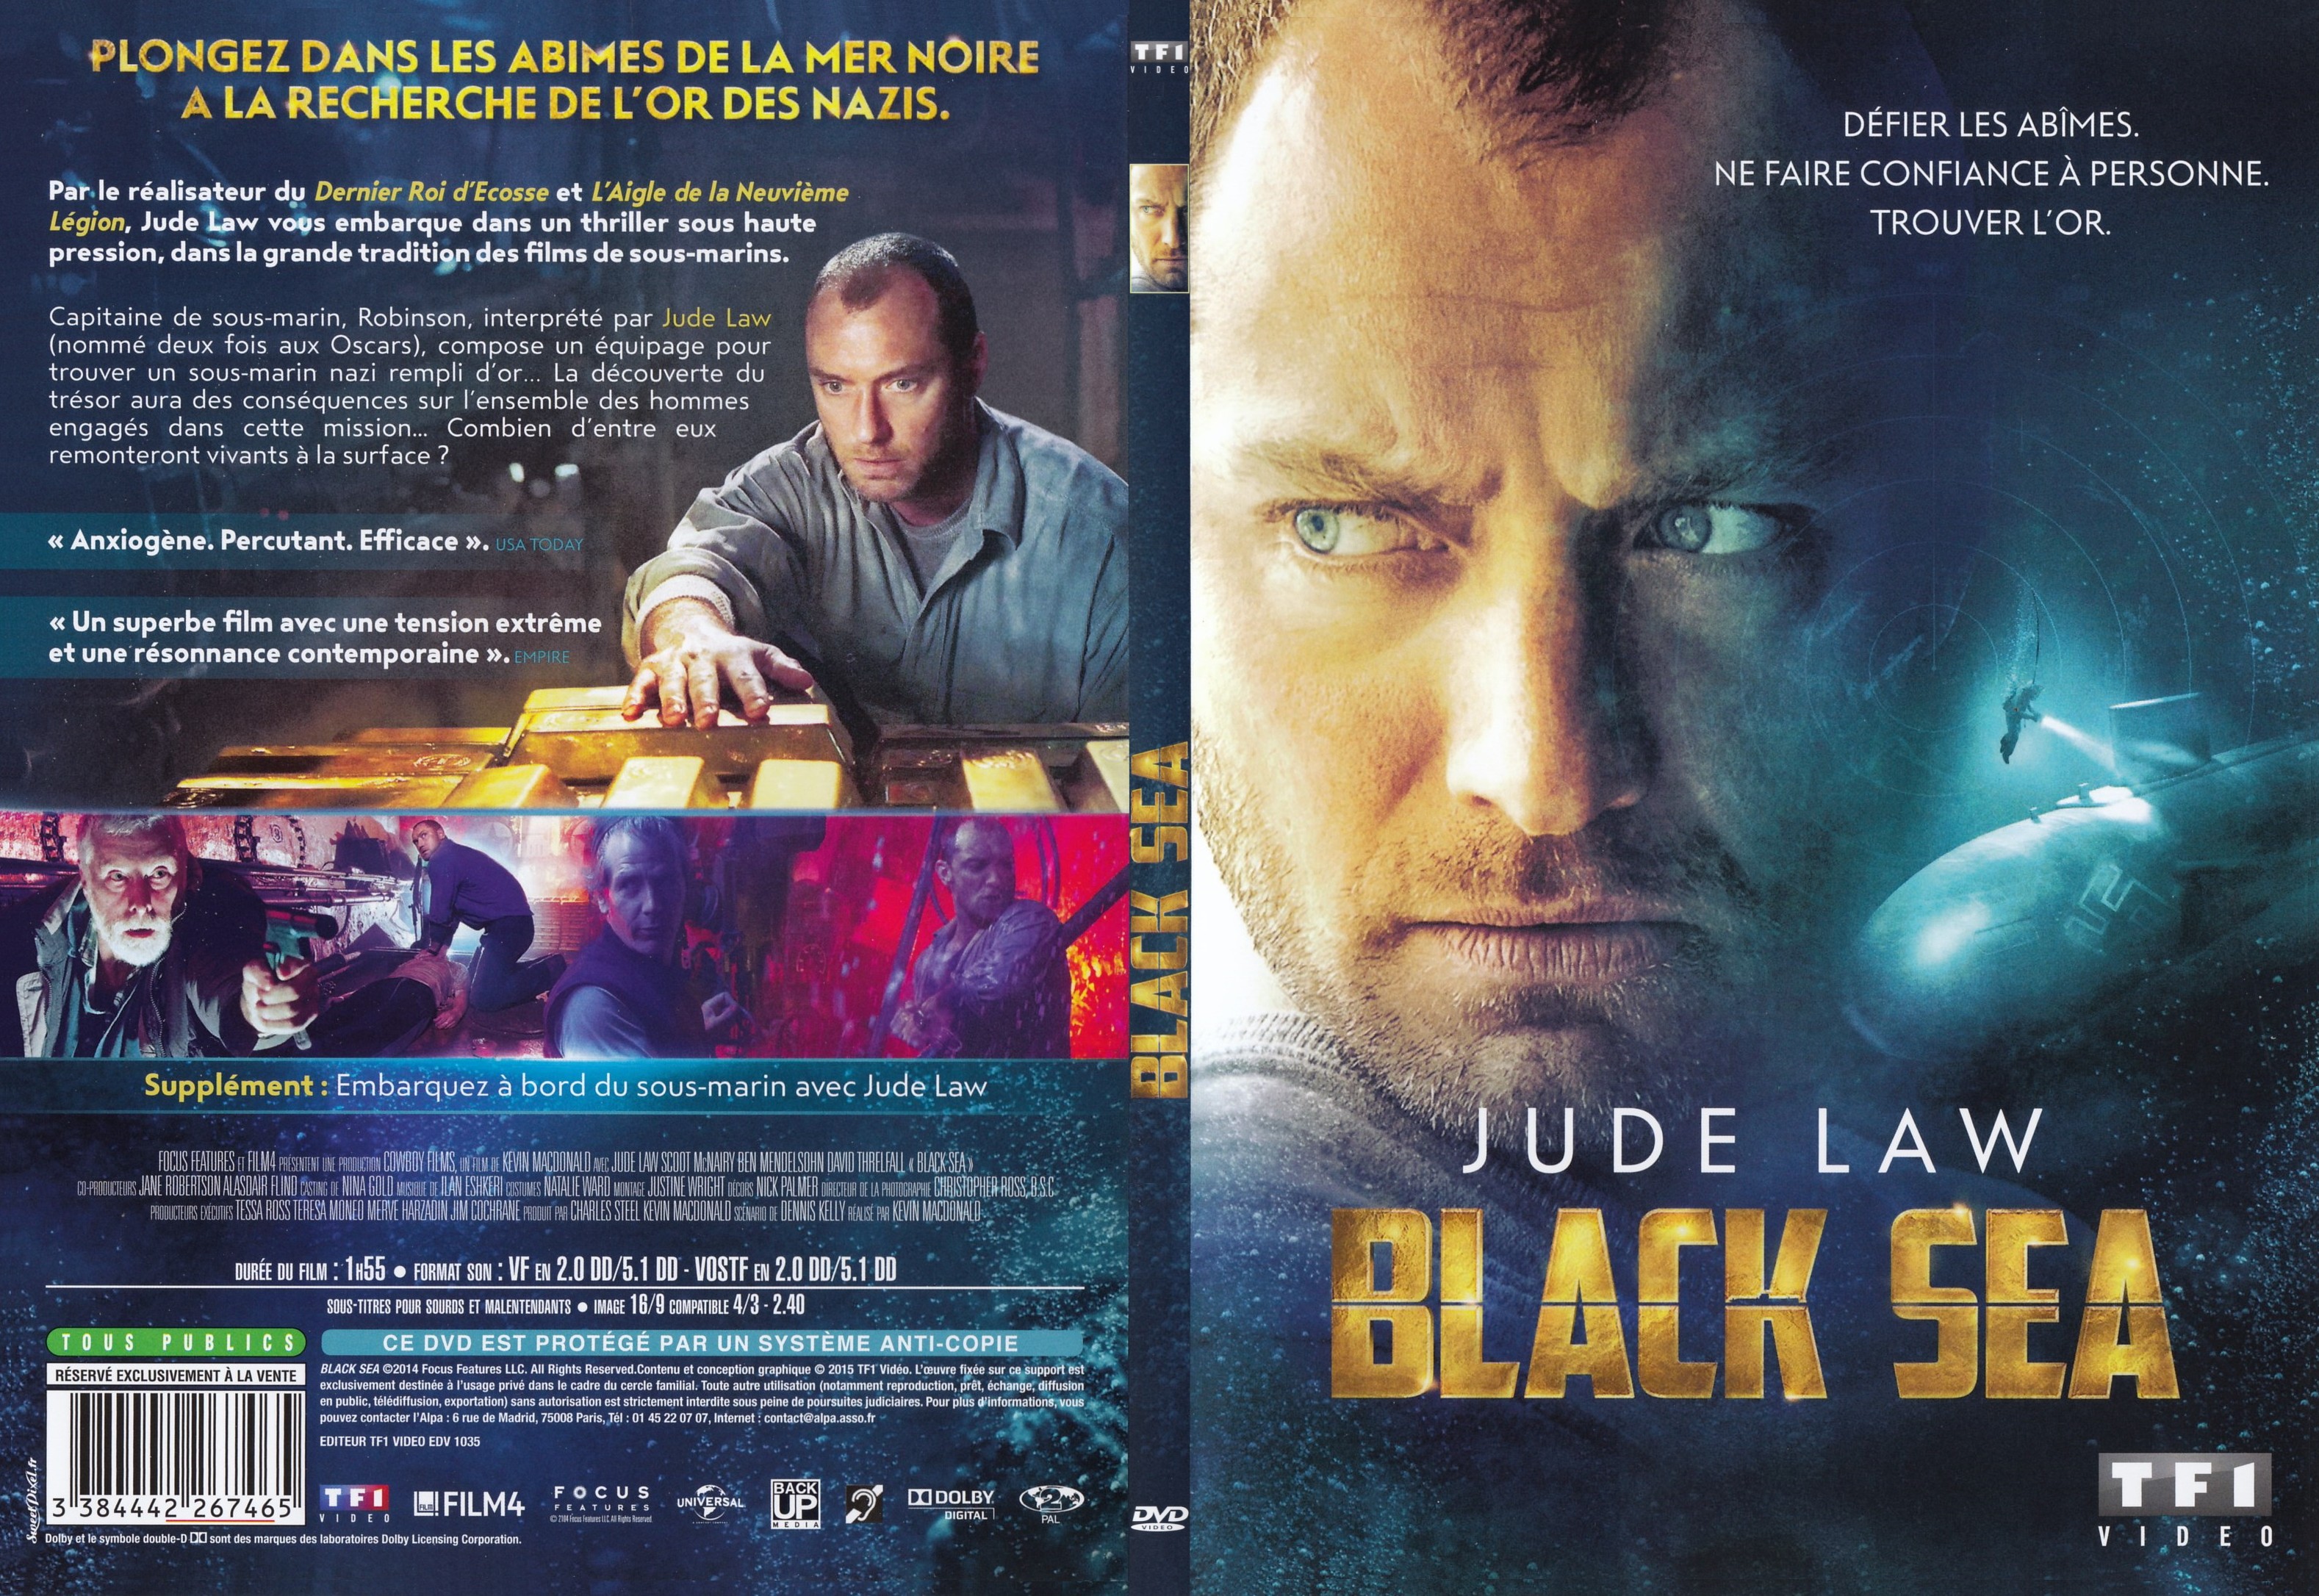 Jaquette DVD Black sea - SLIM